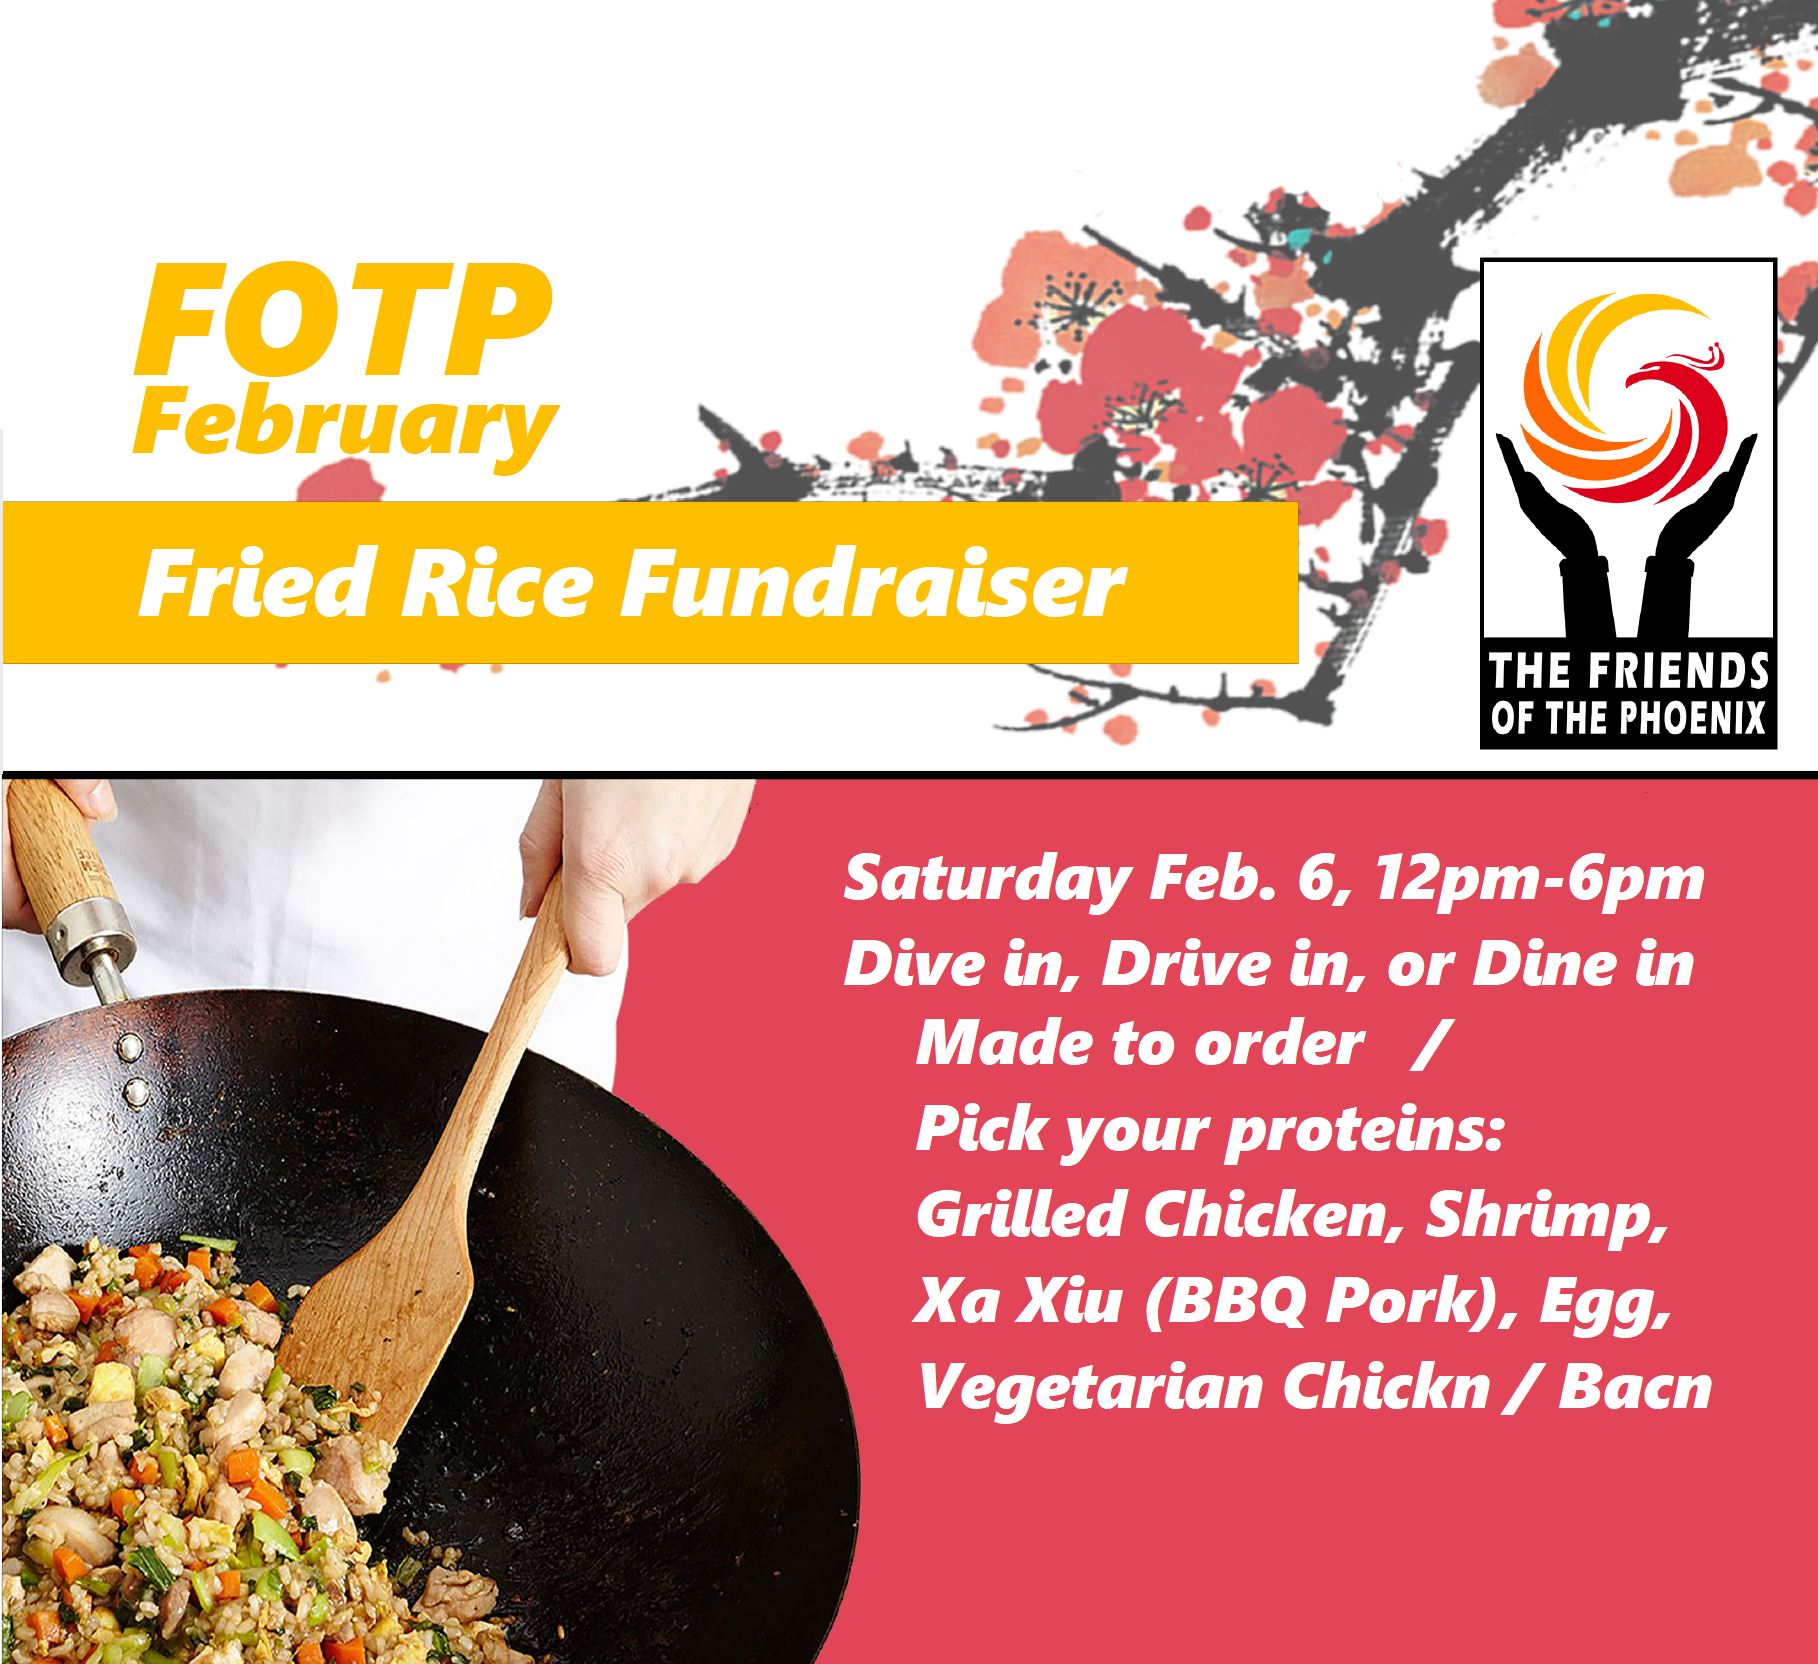 February Fried Rice Fundraiser